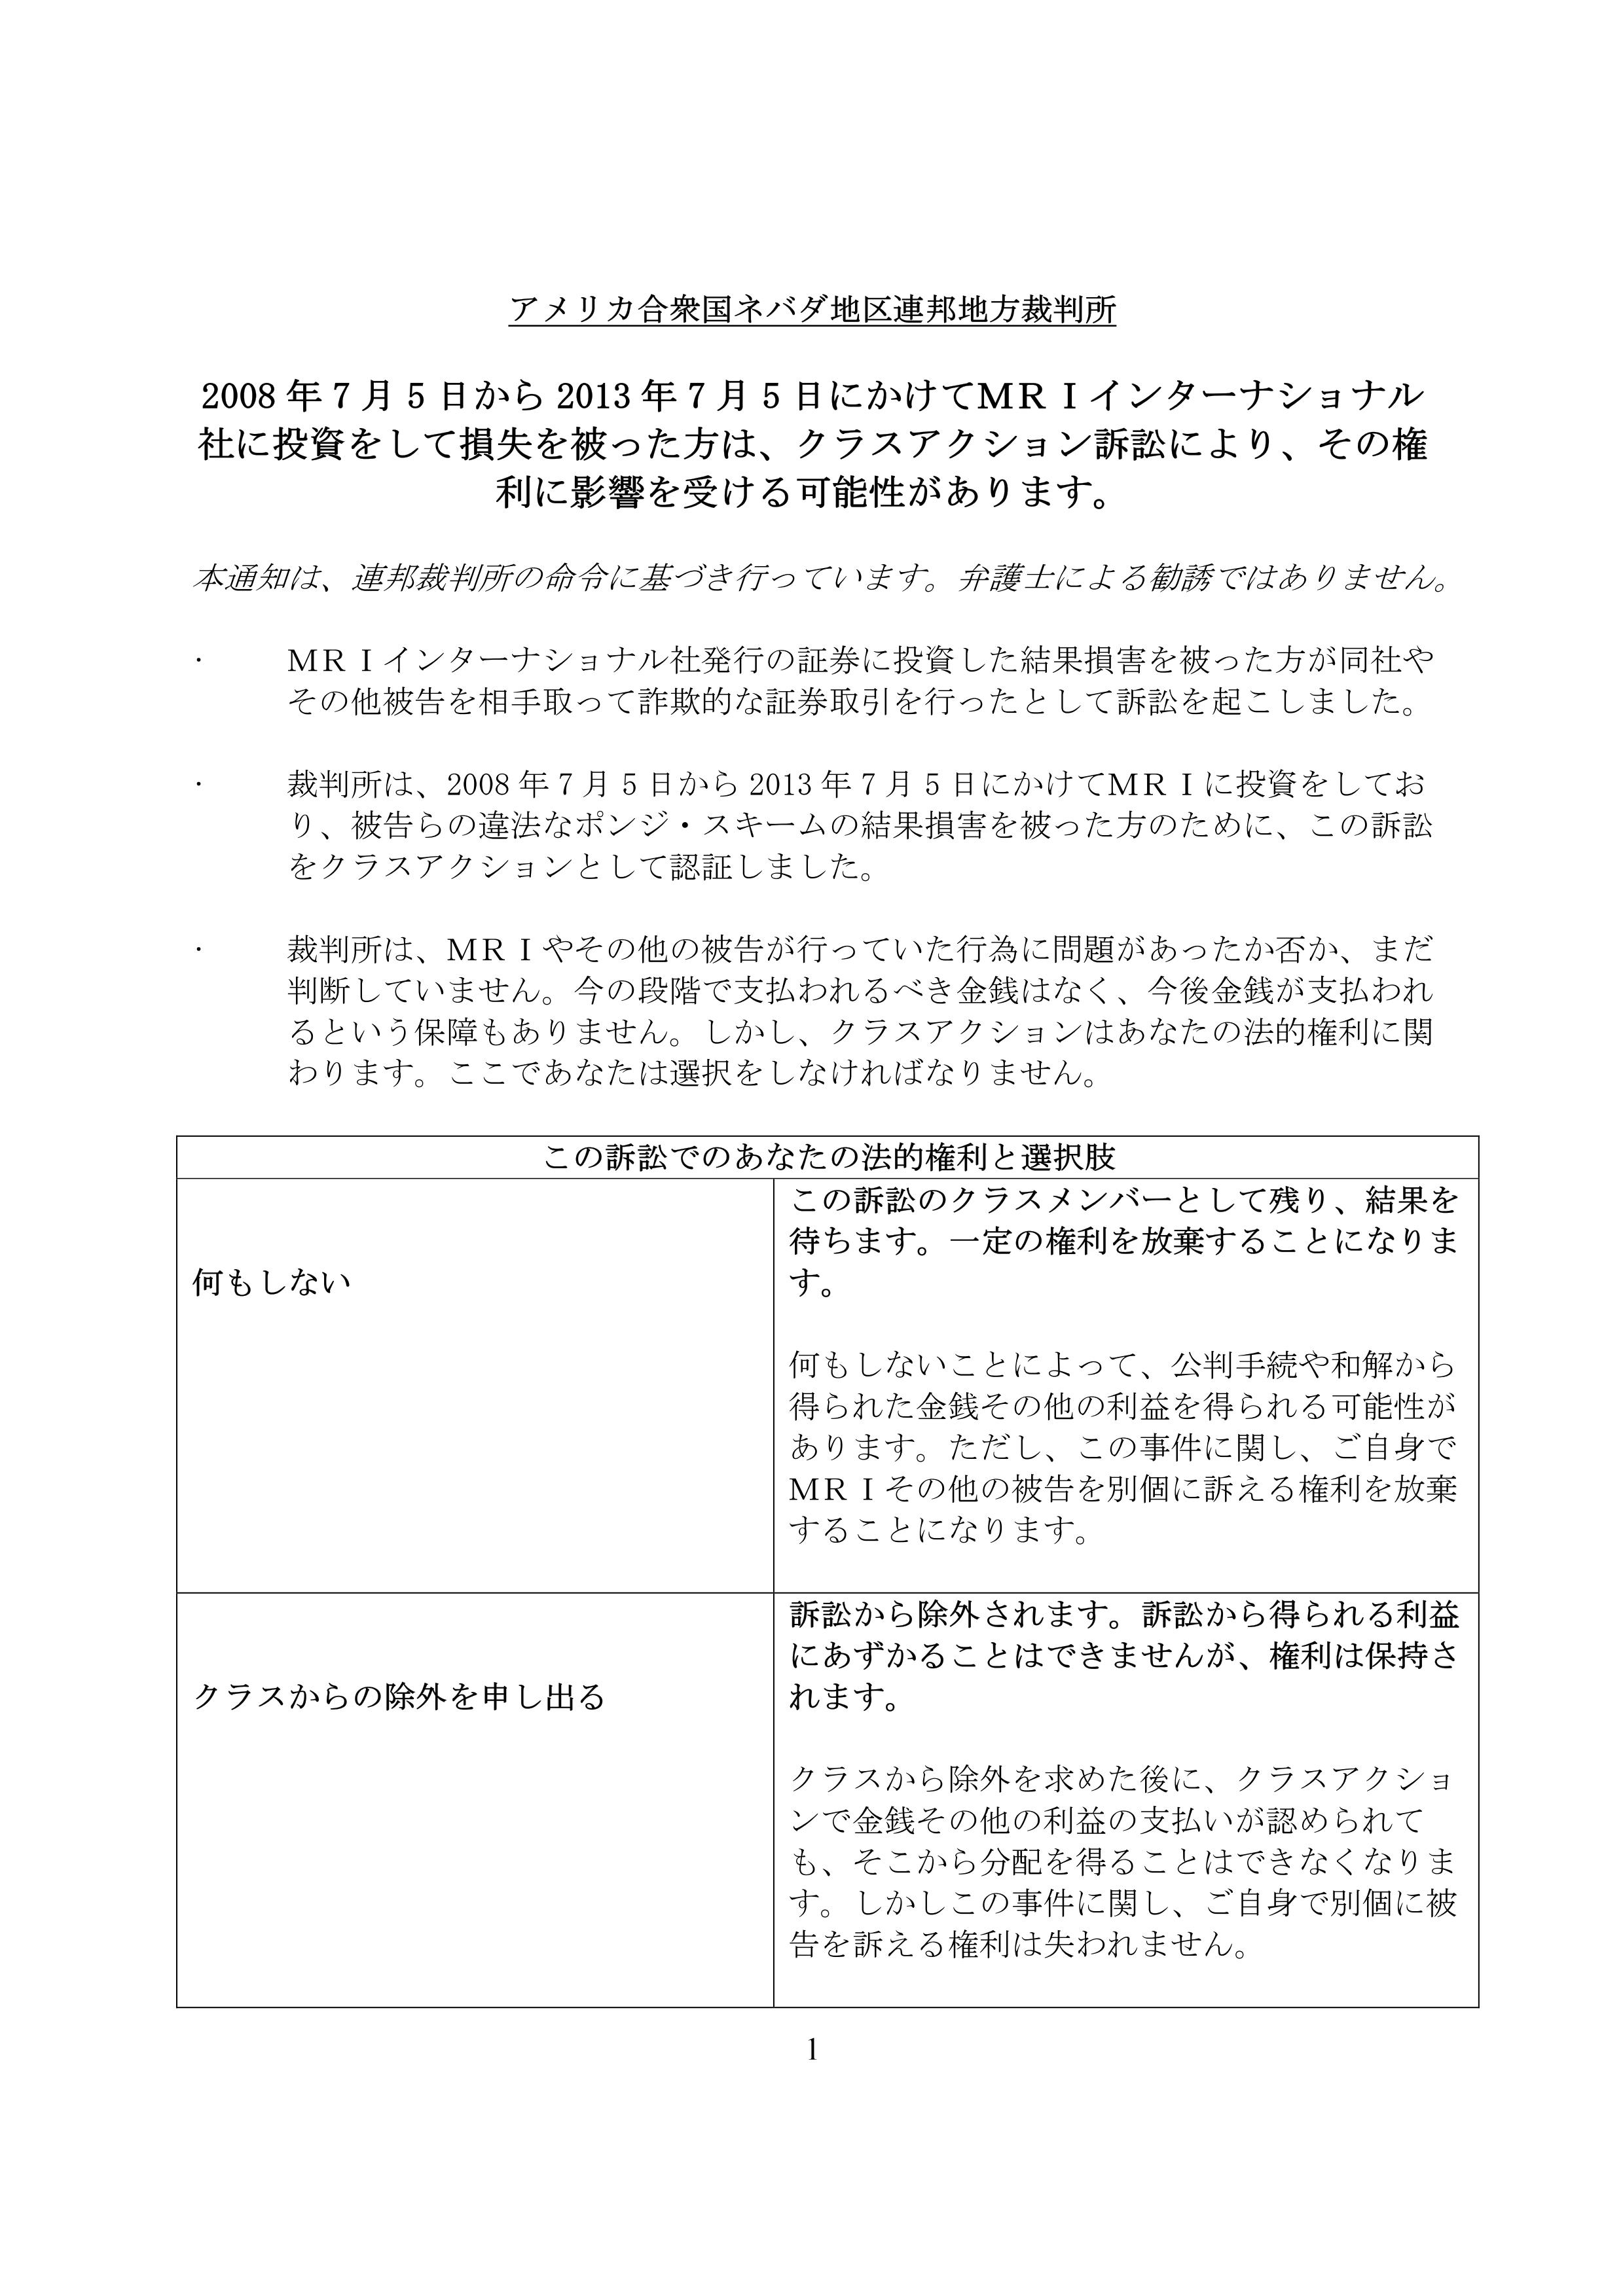 MRI Class Cert Notice_Japanese translation_01